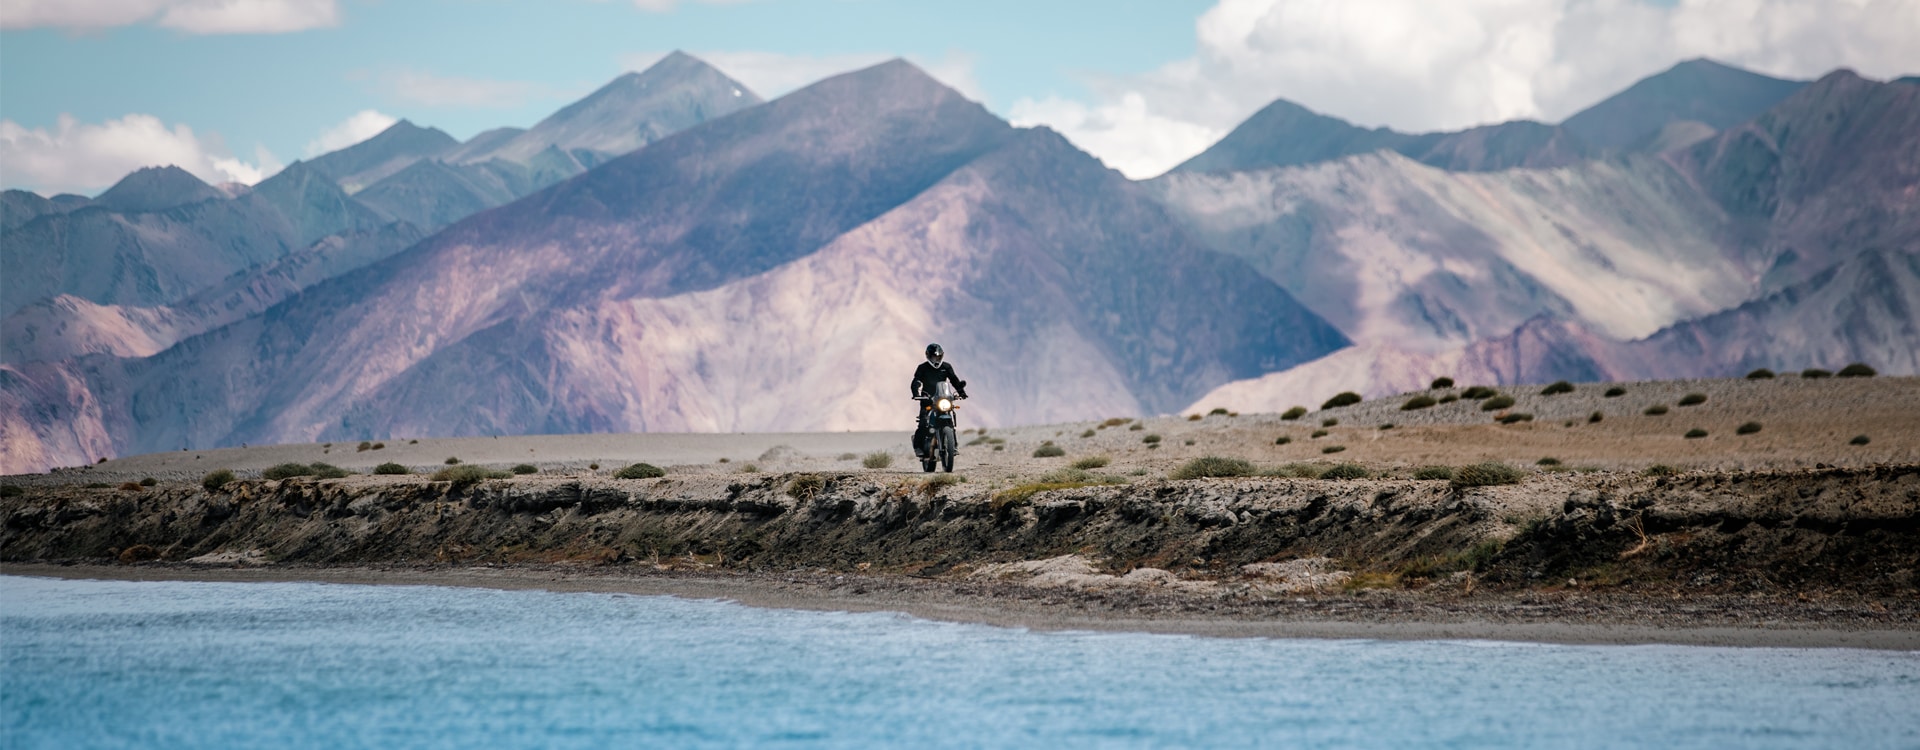 Himalayan - Ready for adventure Bike